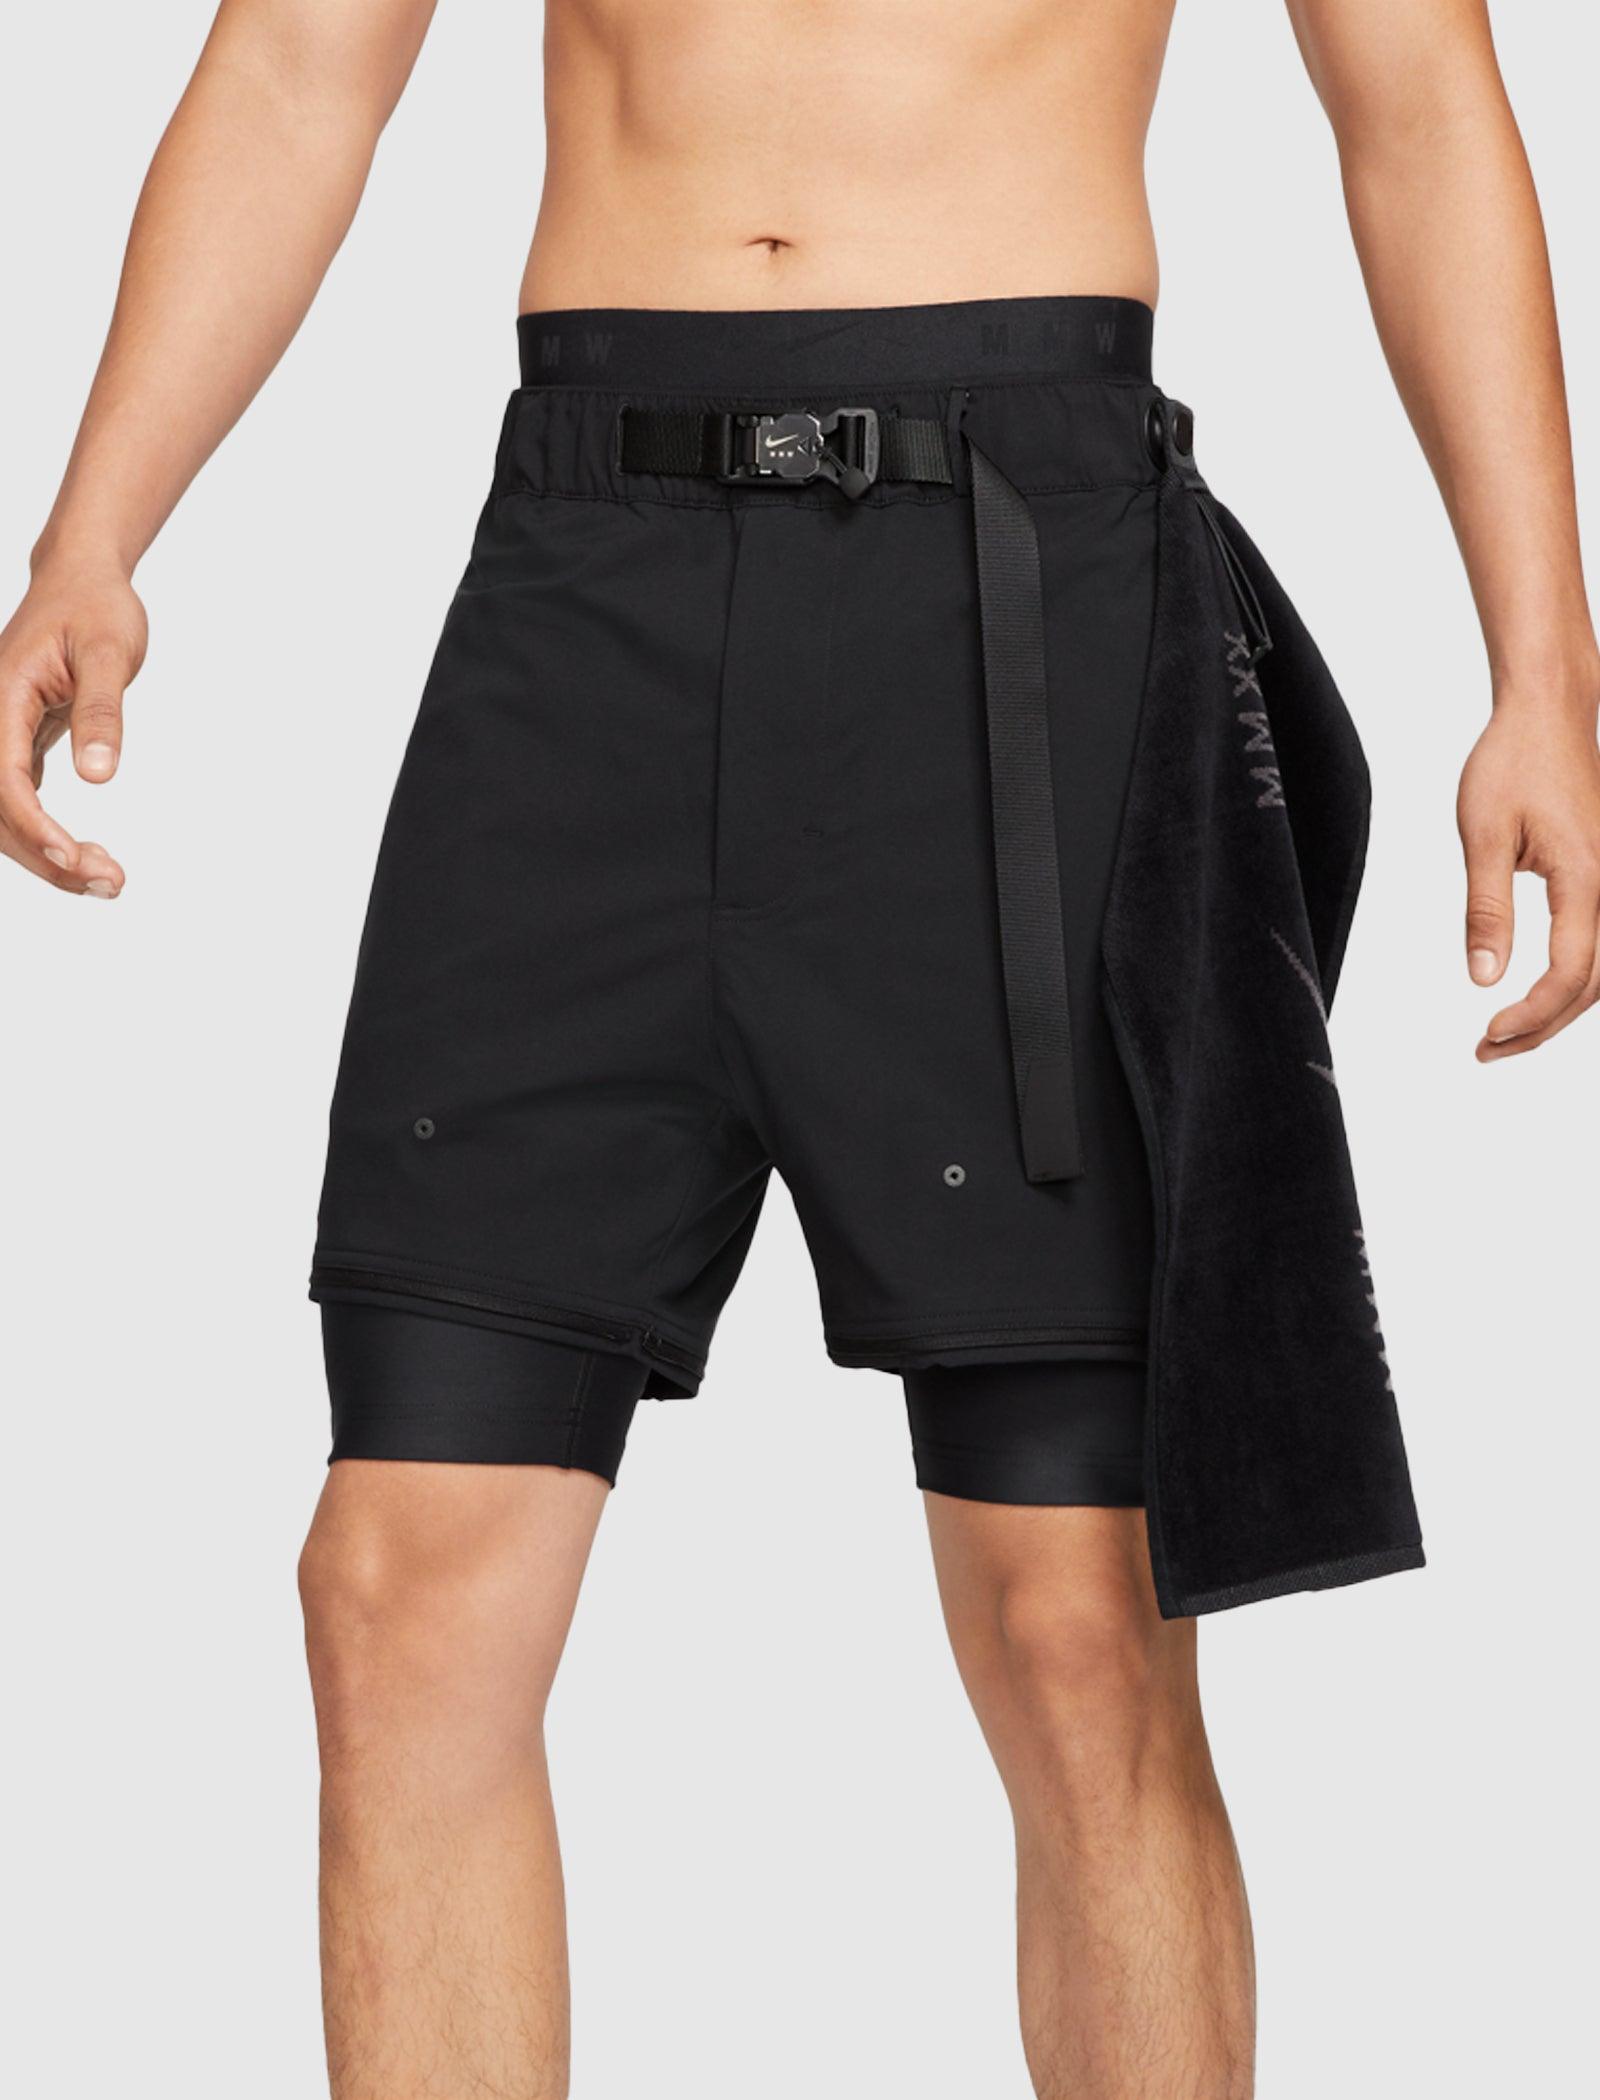 RARE Nike X MMW Matthew Williams Black 3-in-1 Convertible Pants Men Size  Medium